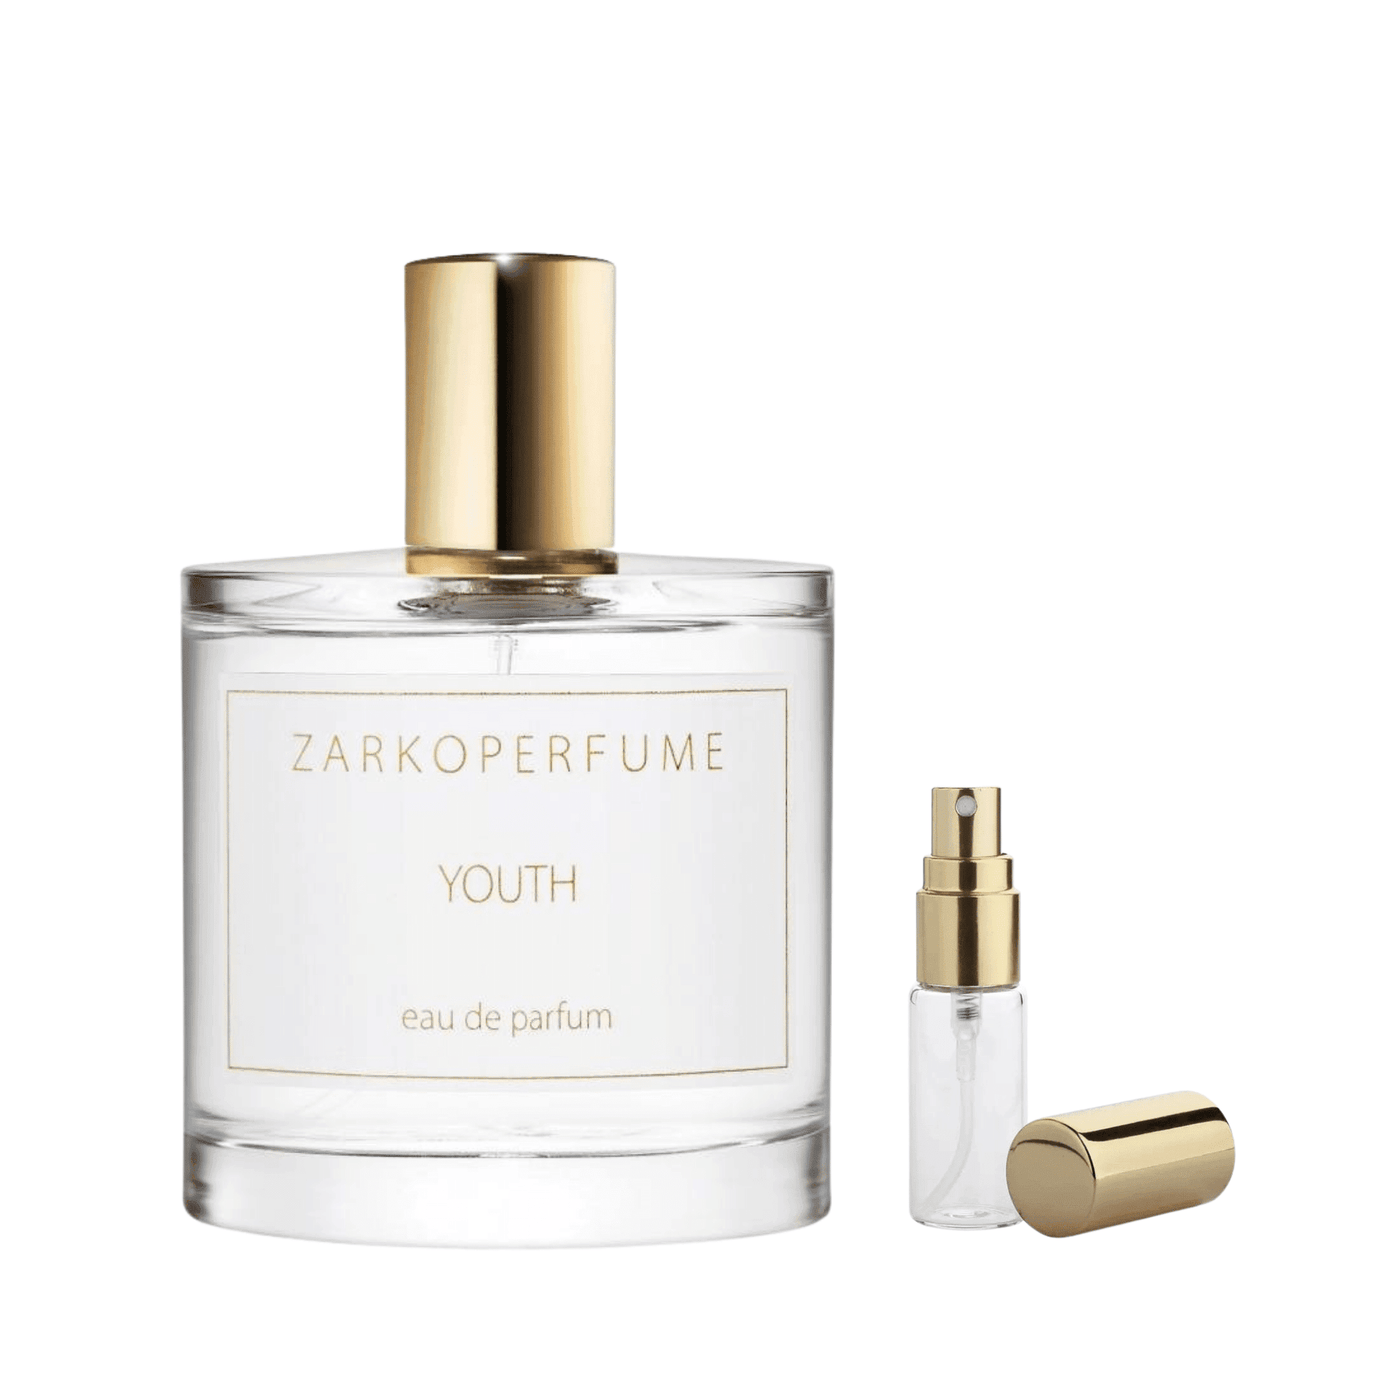 Youth zarkoperfume sample size travel decant